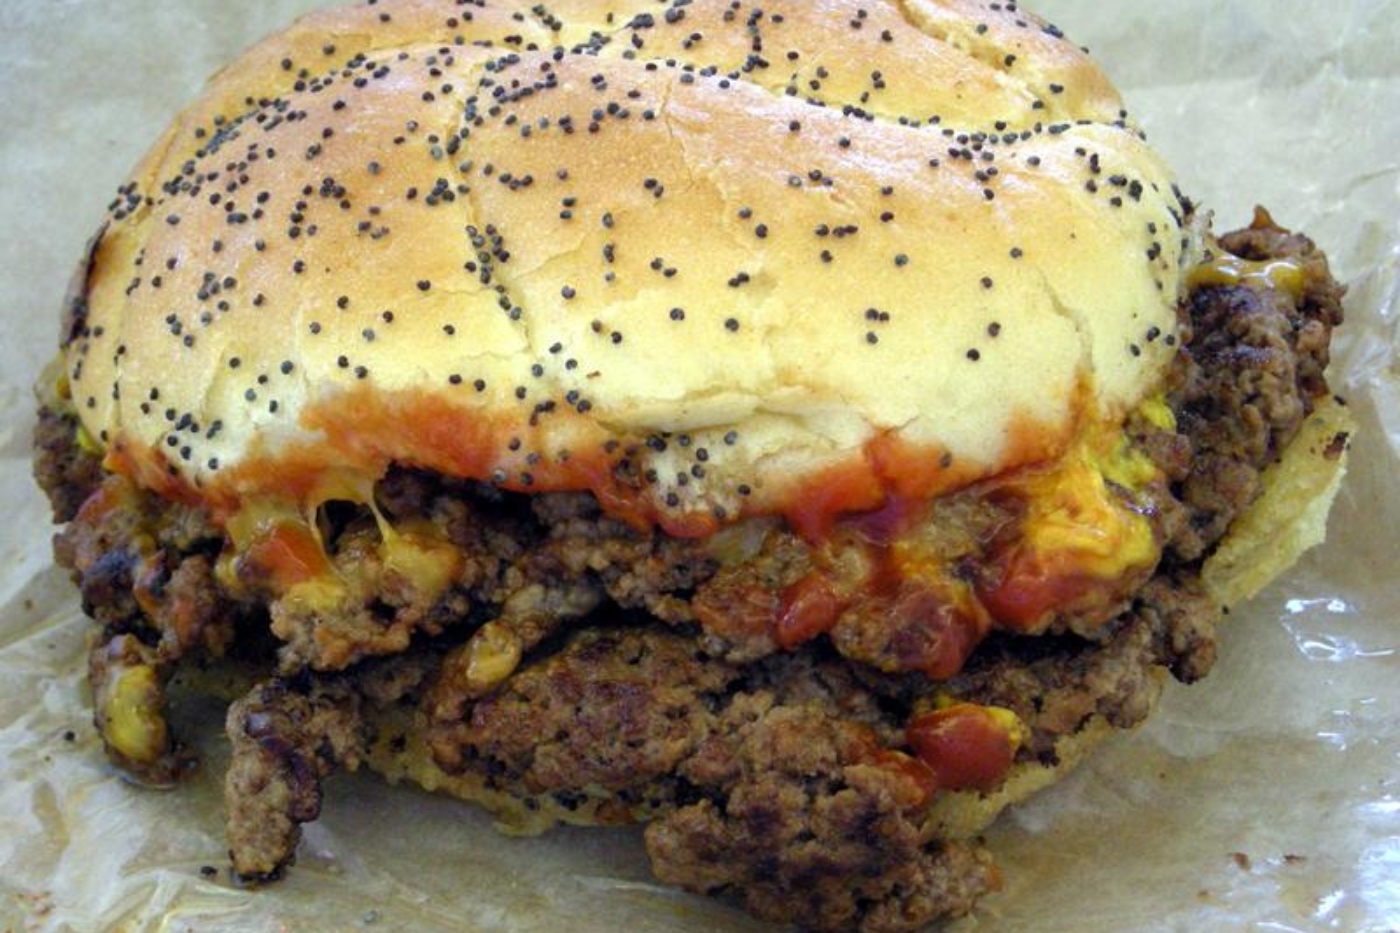 Krazy Jim's Blimpy Burger | Roadfood